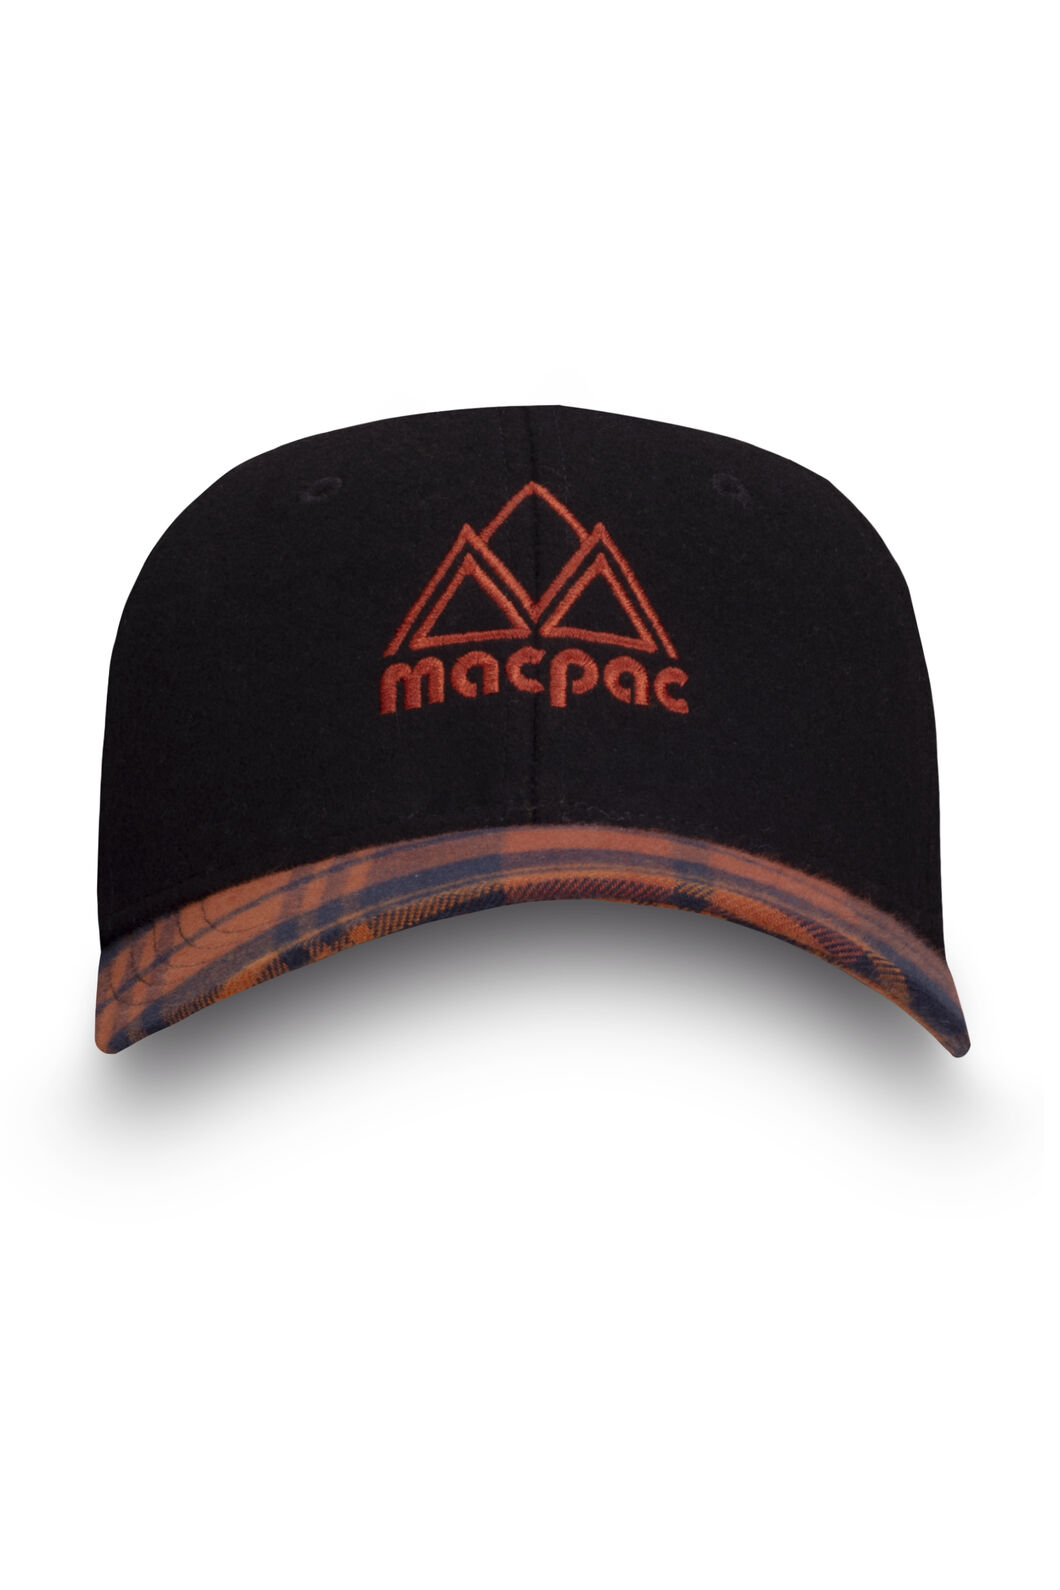 Macpac Porters Vintage Cap, Picante/Orange Flame, hi-res